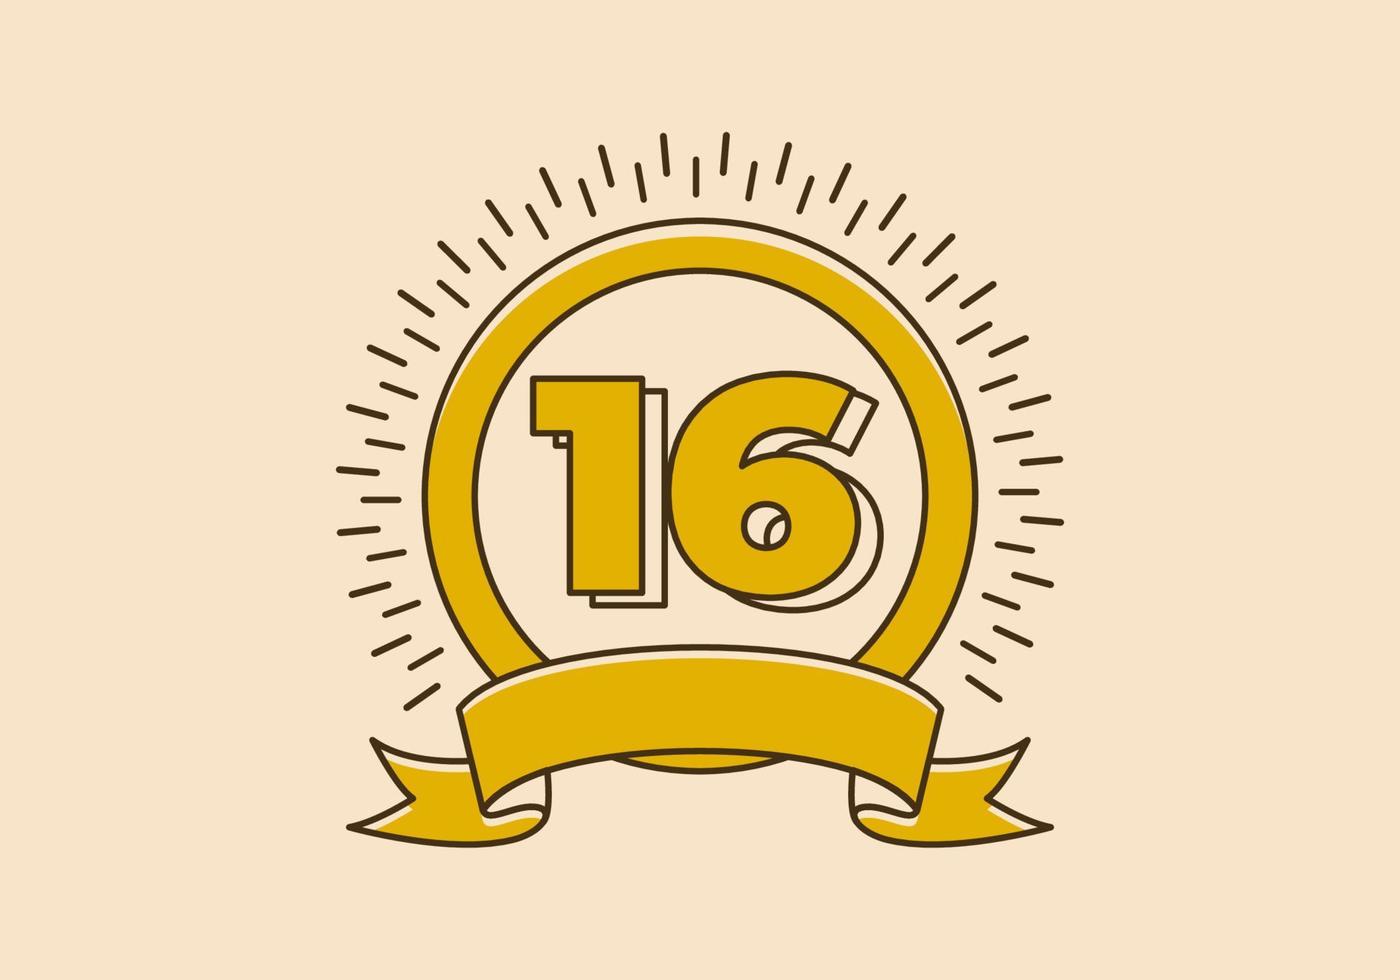 distintivo de círculo amarelo vintage com o número 16 nele vetor